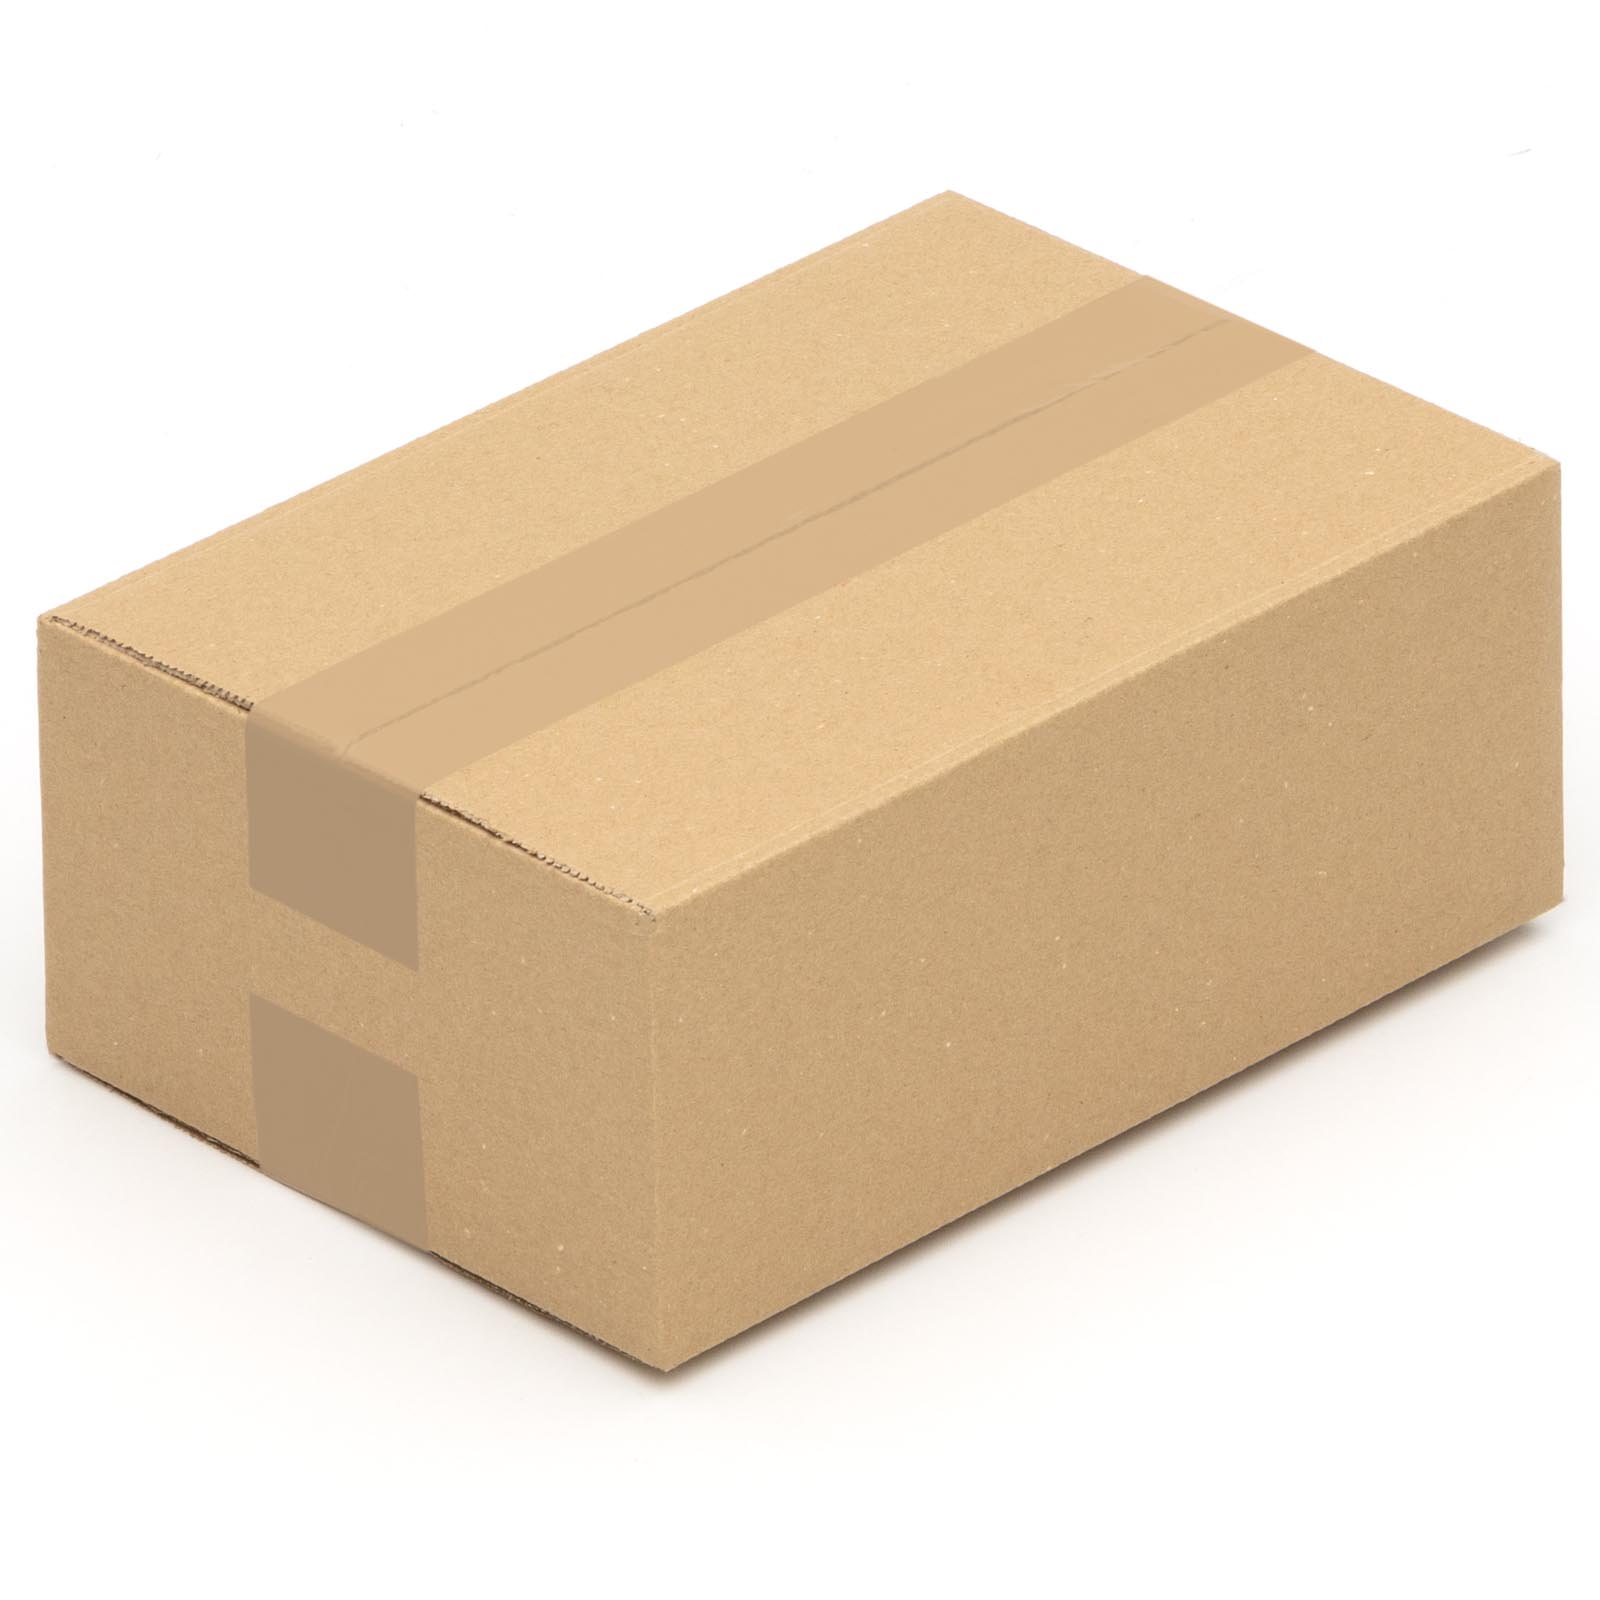 Karton-Innenmass Versandkartons braun 100 Faltkarton 250x175x100 mm 